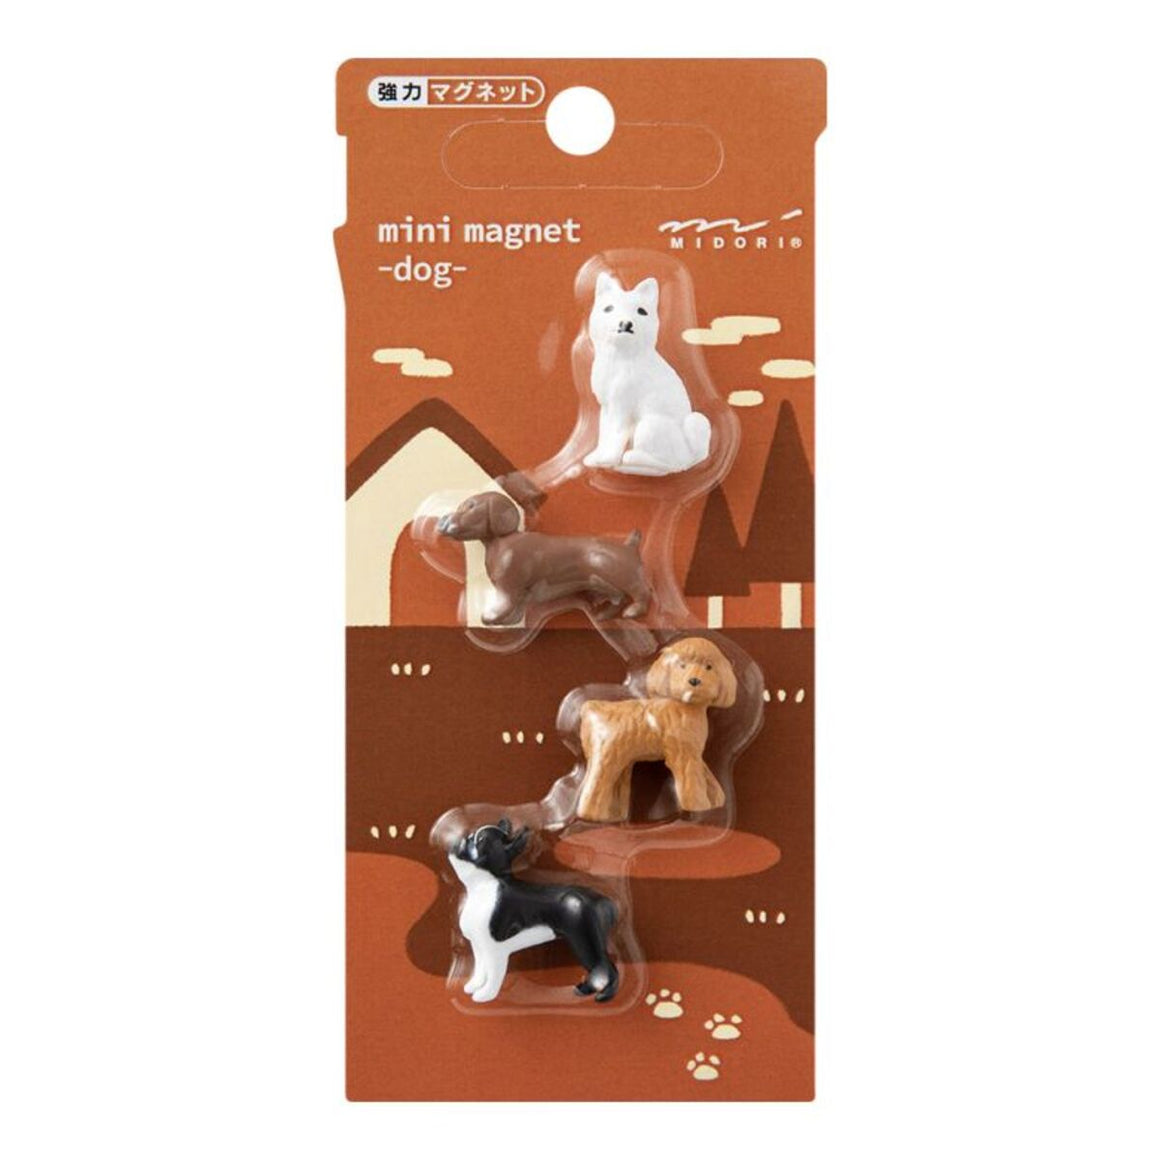 Mini magnet set | dogs | set of 4